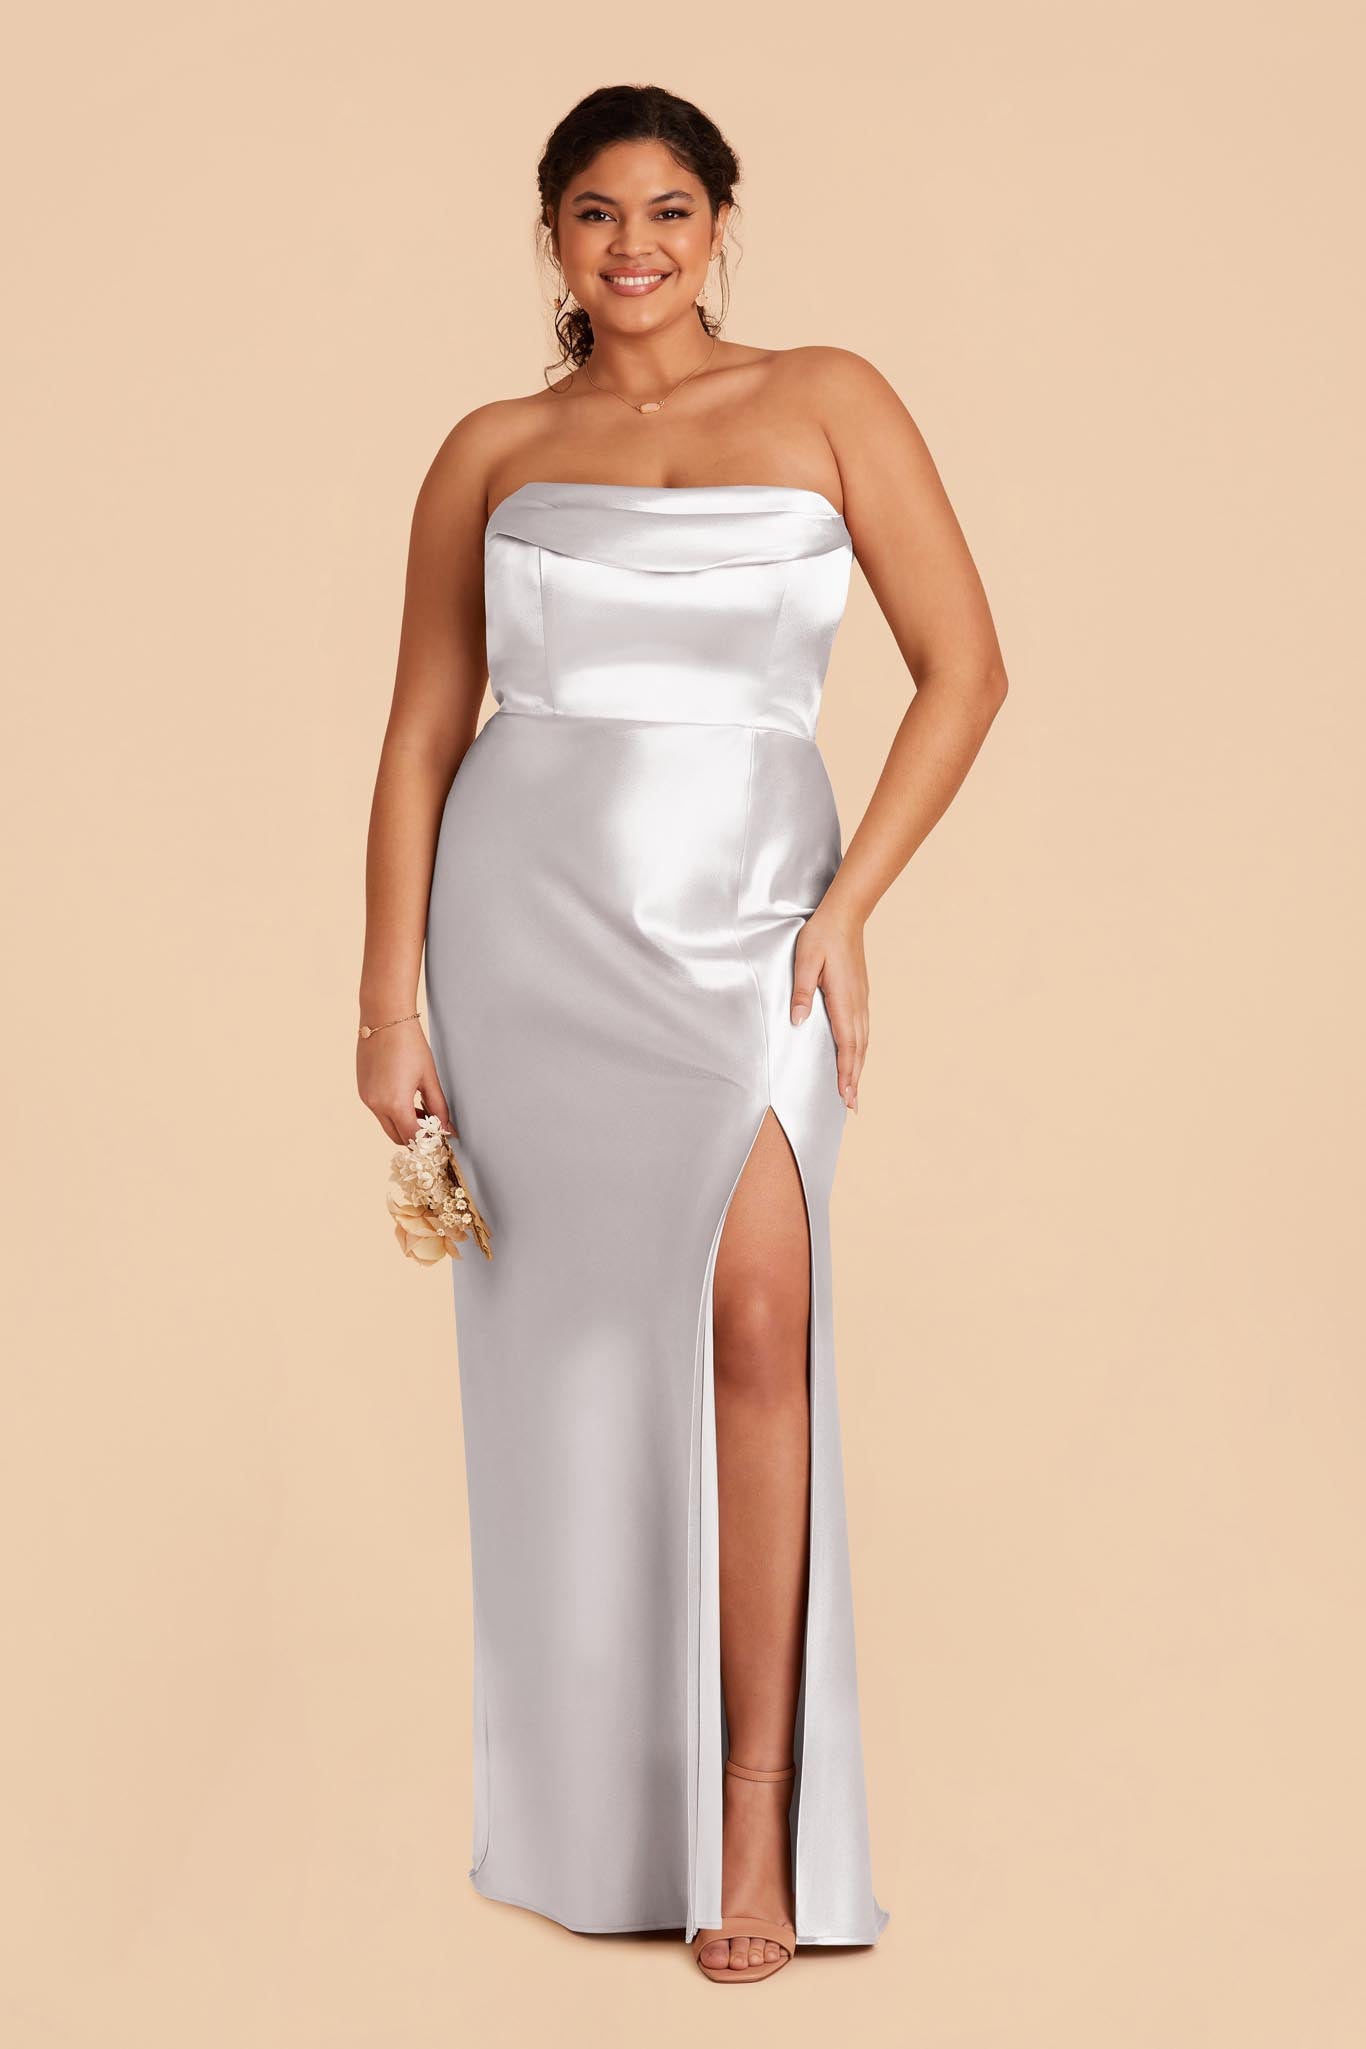 Platinum Mia Convertible Dress by Birdy Grey